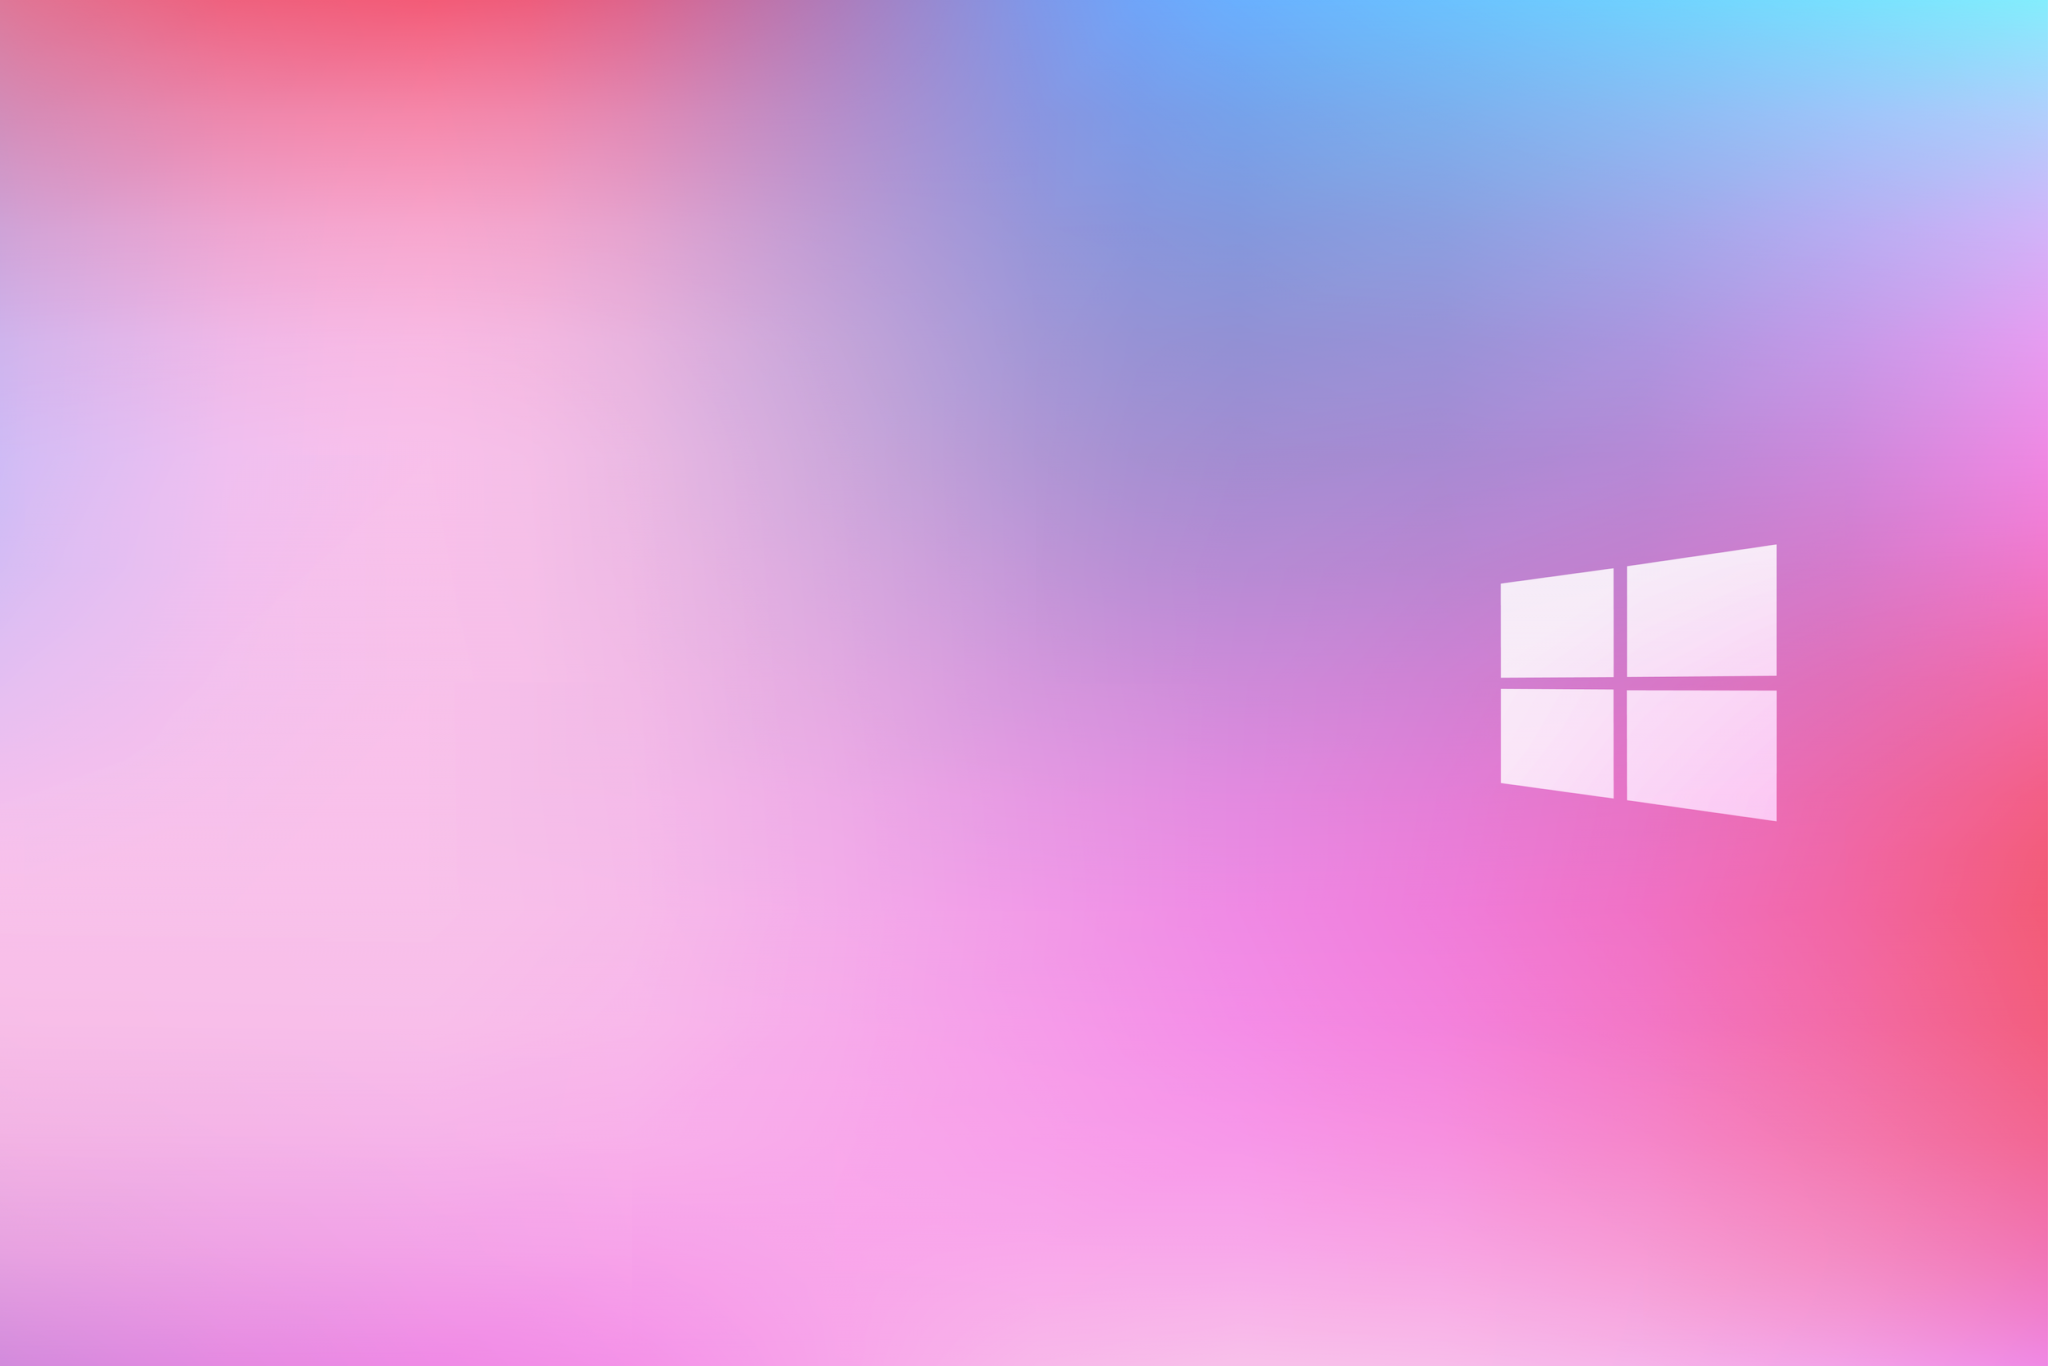 Windows 11 Wallpaper HD 4K Free Download. Windows wallpaper, Simple wallpaper, Cute laptop wallpaper